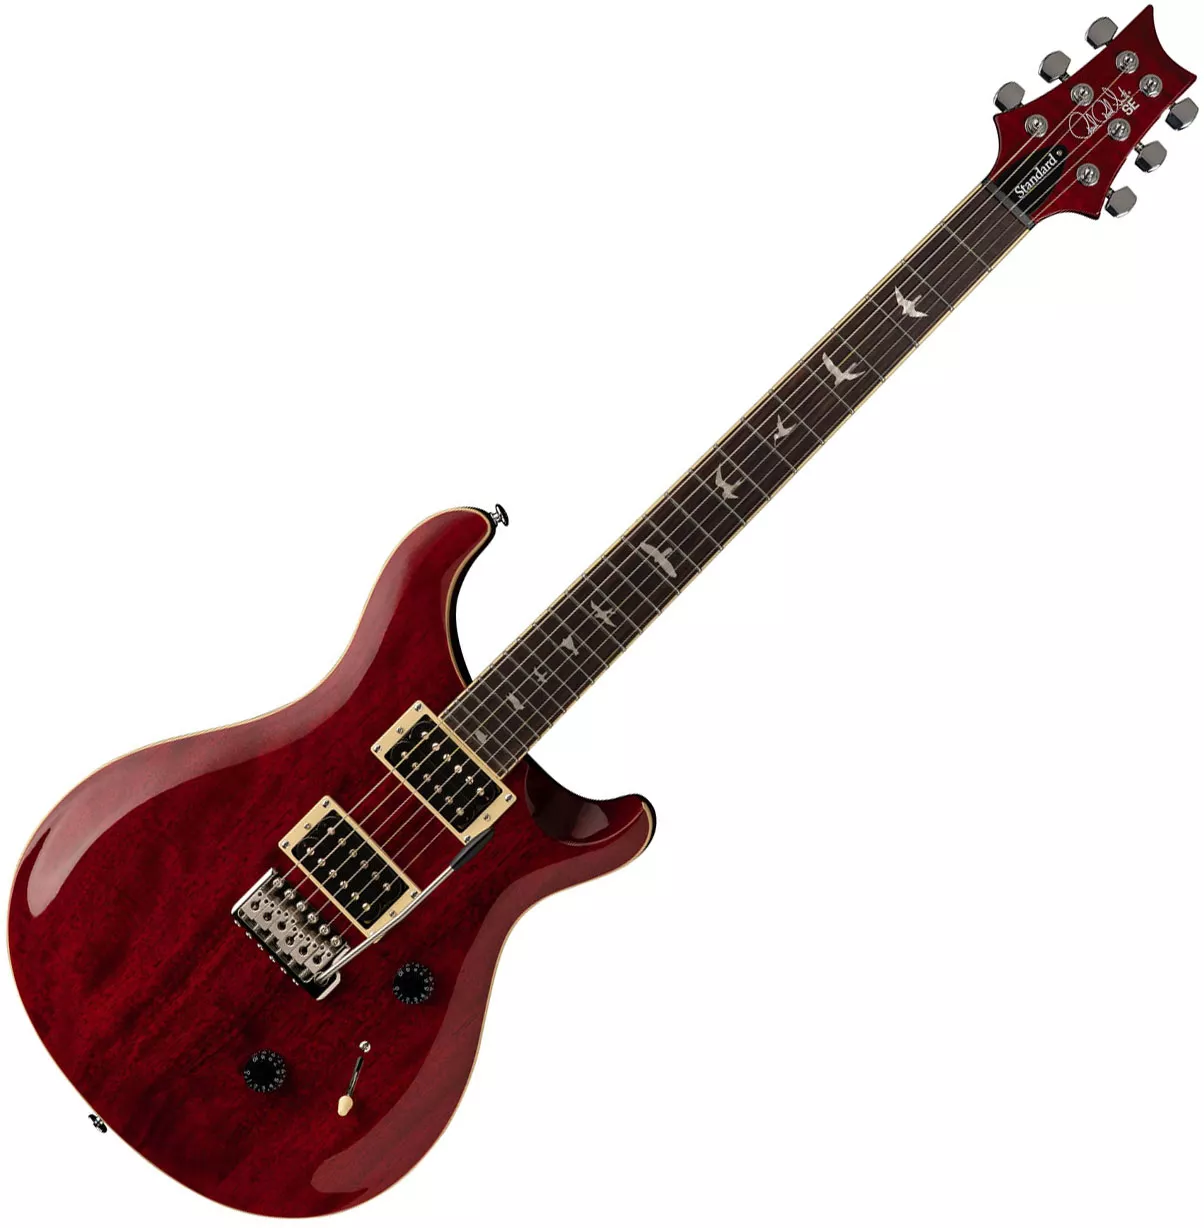 Prs SE Standard 24 - vintage cherry red Double cut electric guitar